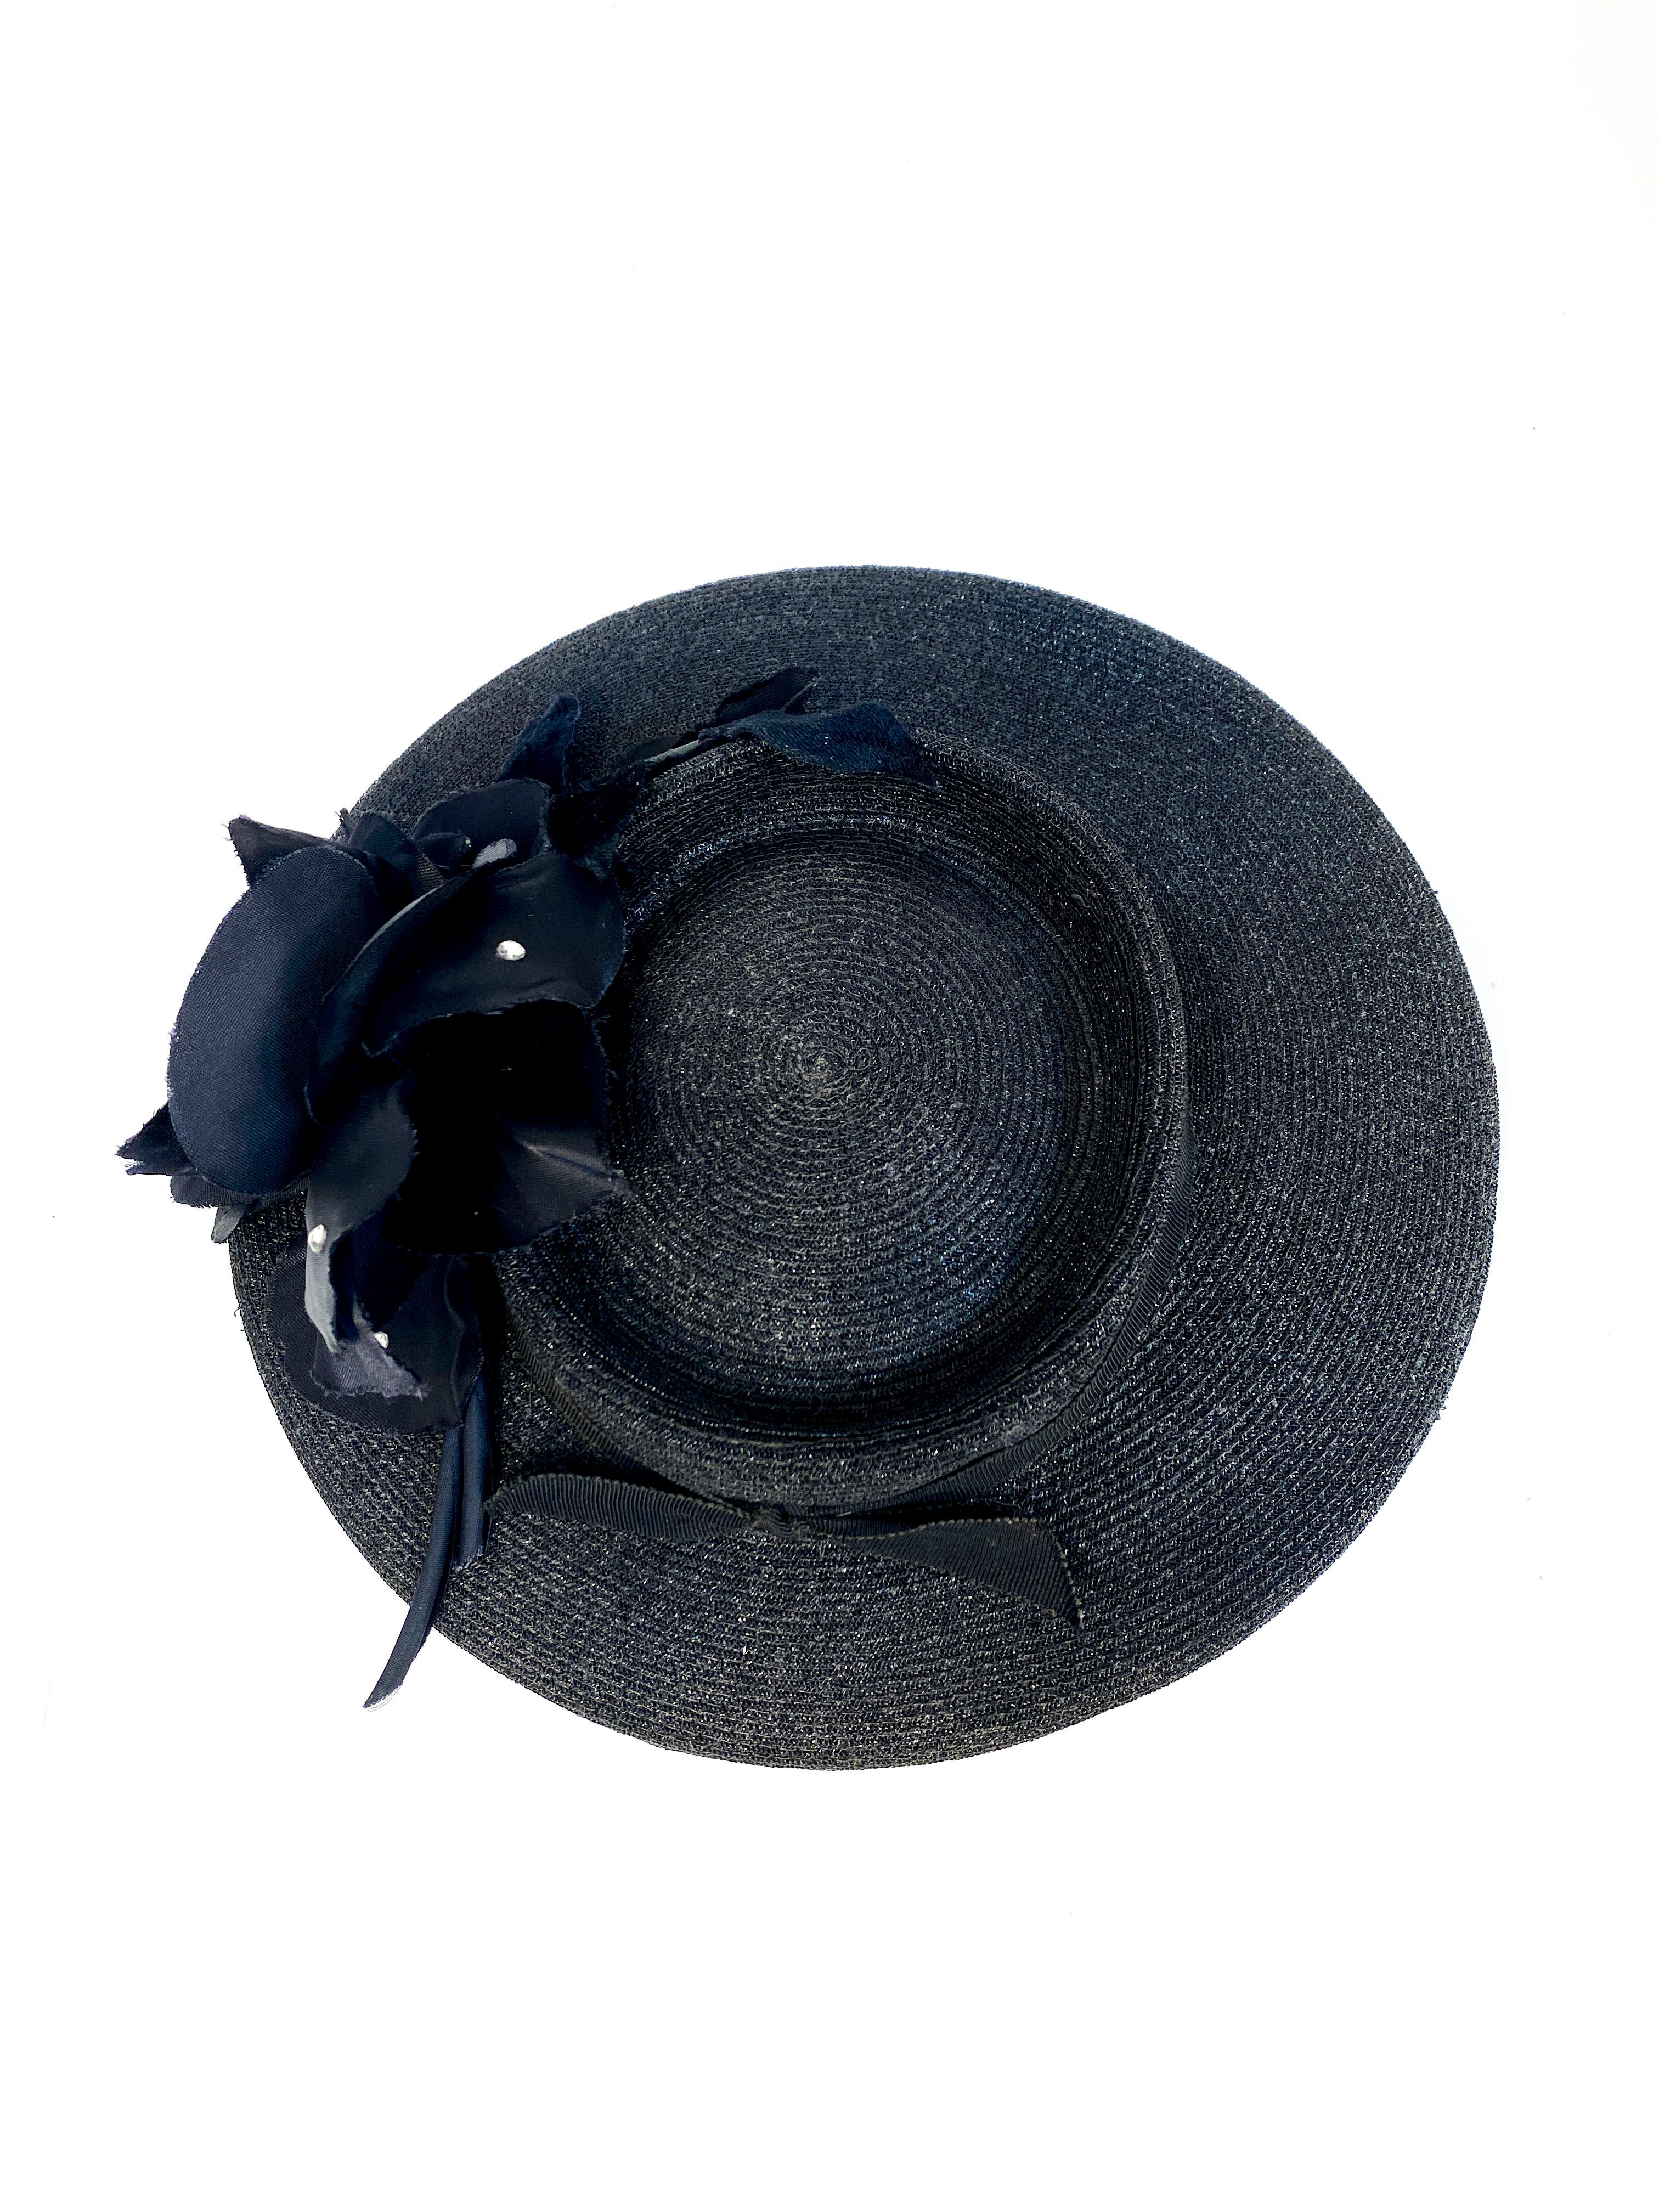 Women's 1940s Black Straw Perch Hat with Silk Rhinestoned Flower 